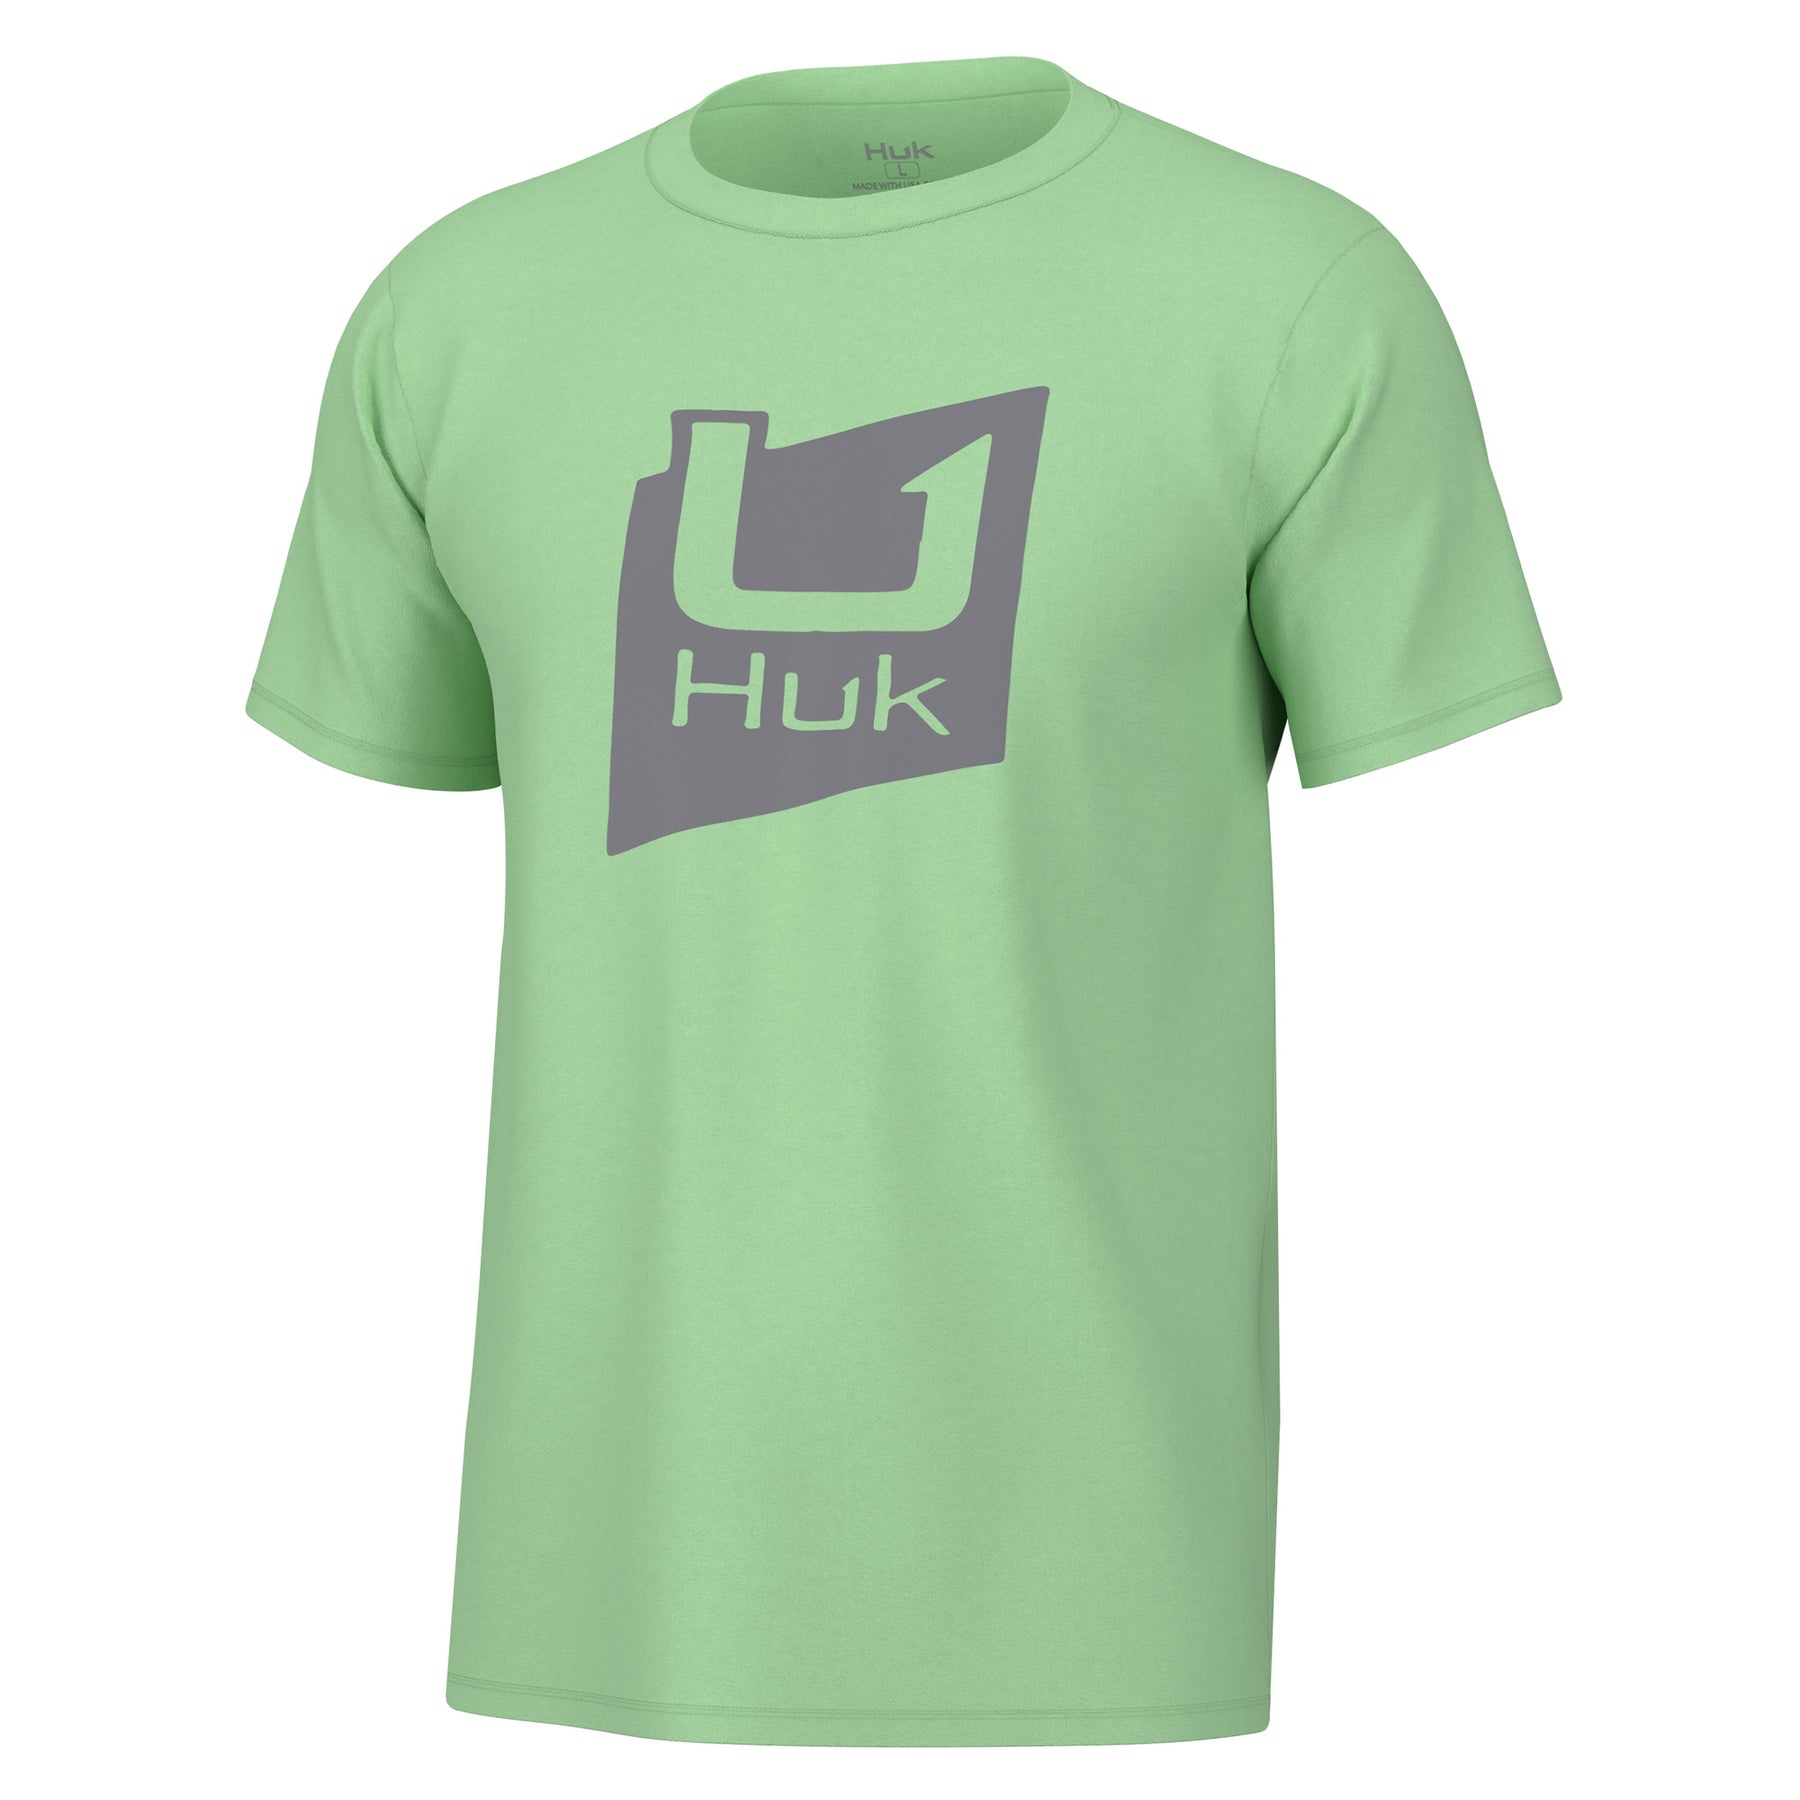 Huk Slice Logo Tee